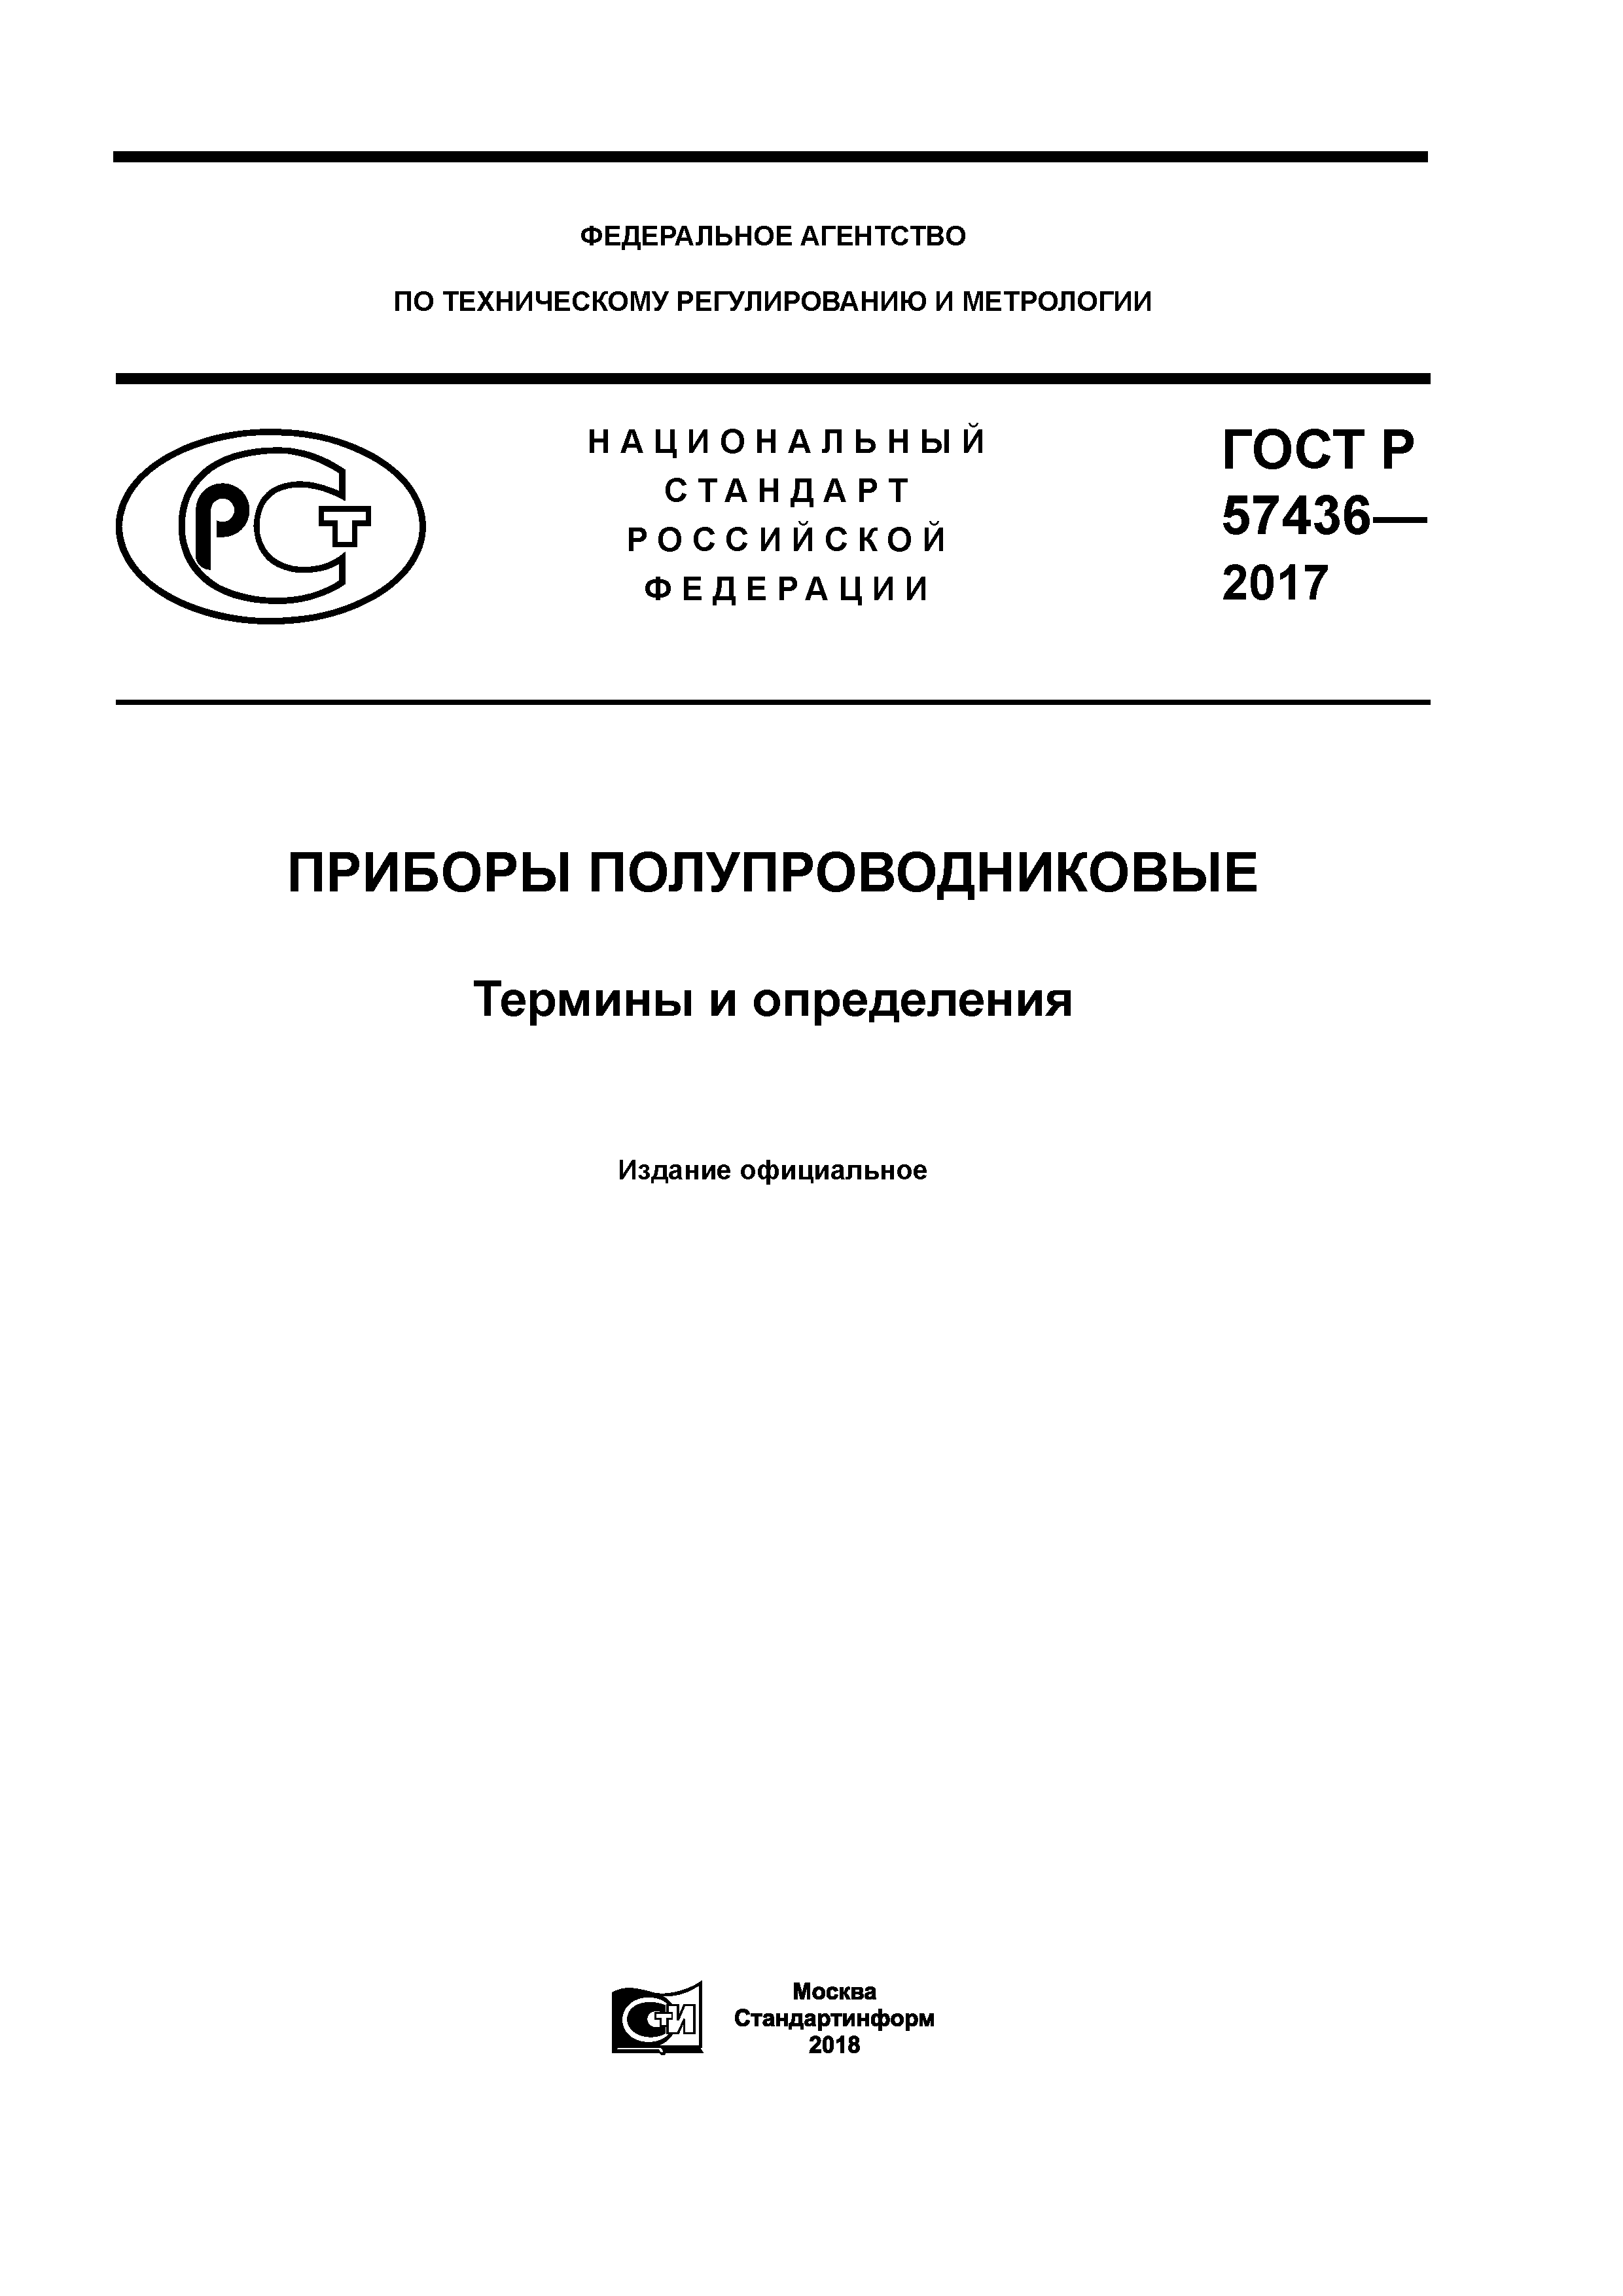 ГОСТ Р 57436-2017